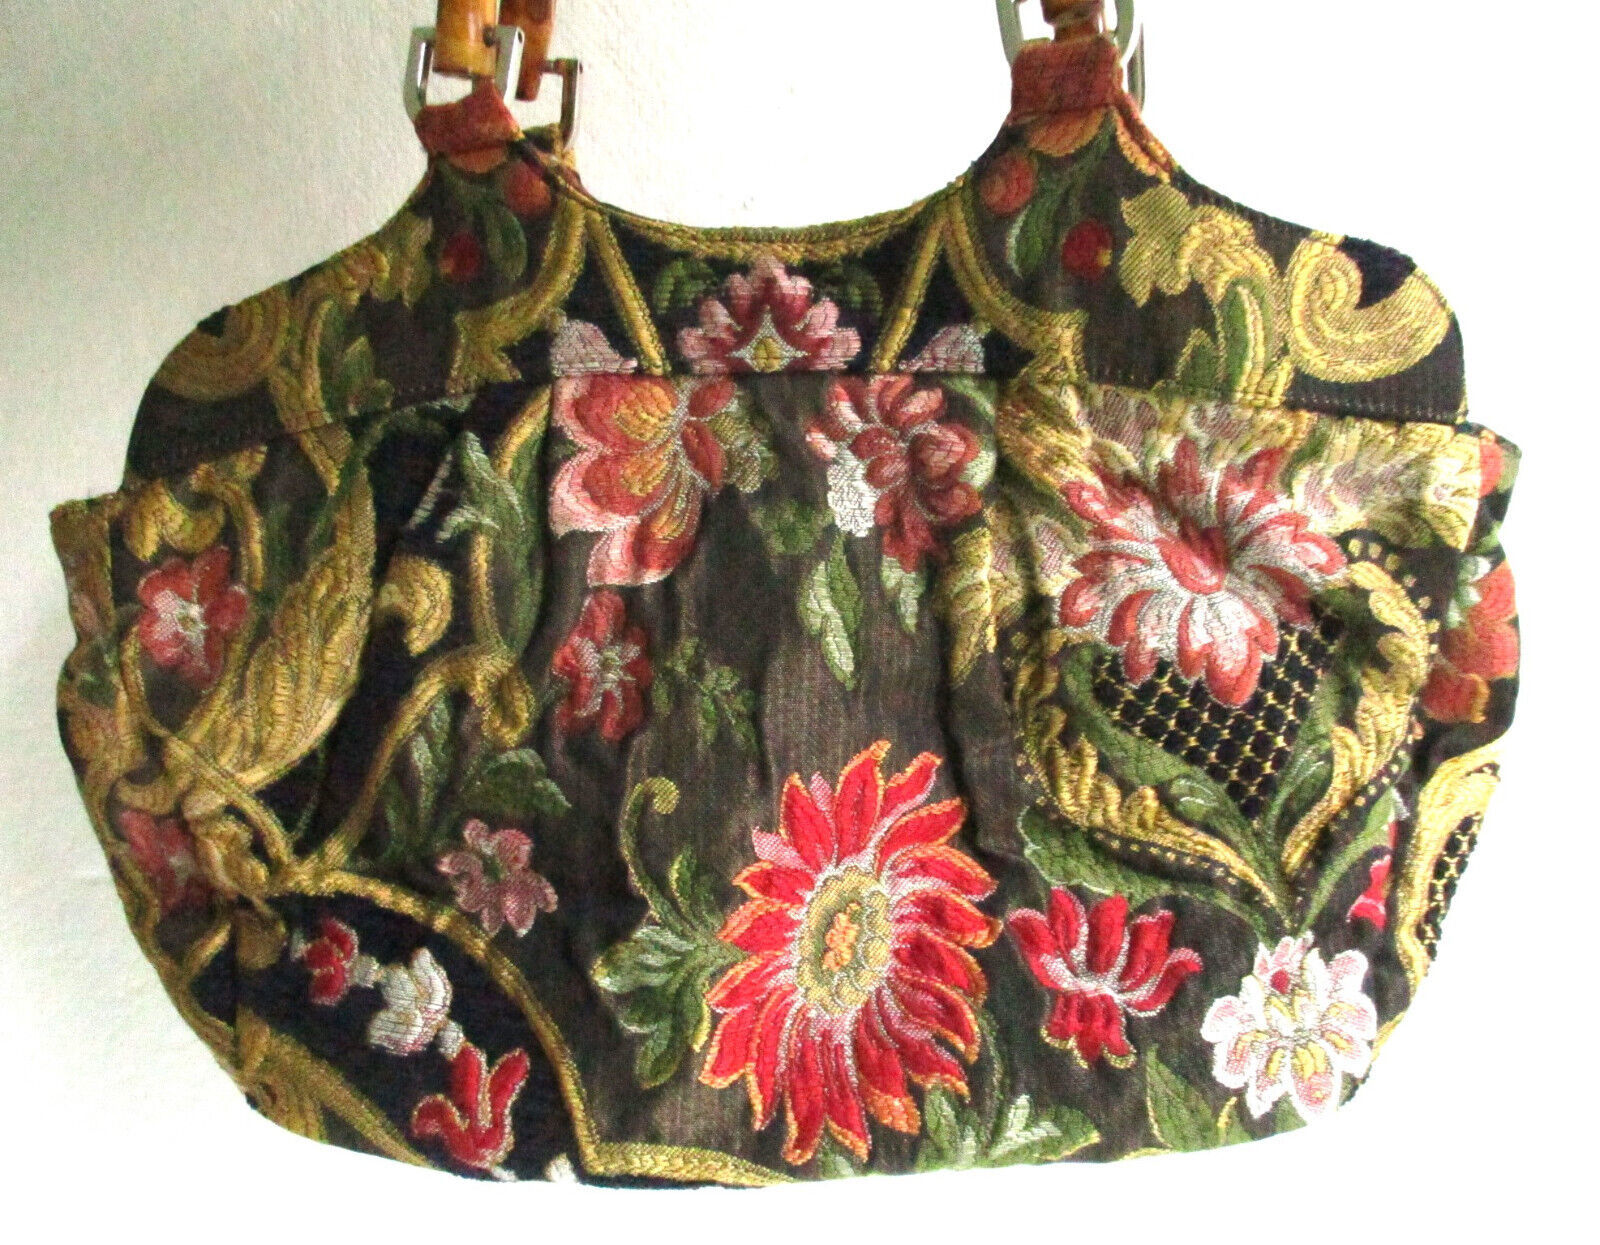 Primary image for Talbots Tapestry Handbag Bag Victorian Motif Flowers Scrolls Horsebit Hardware